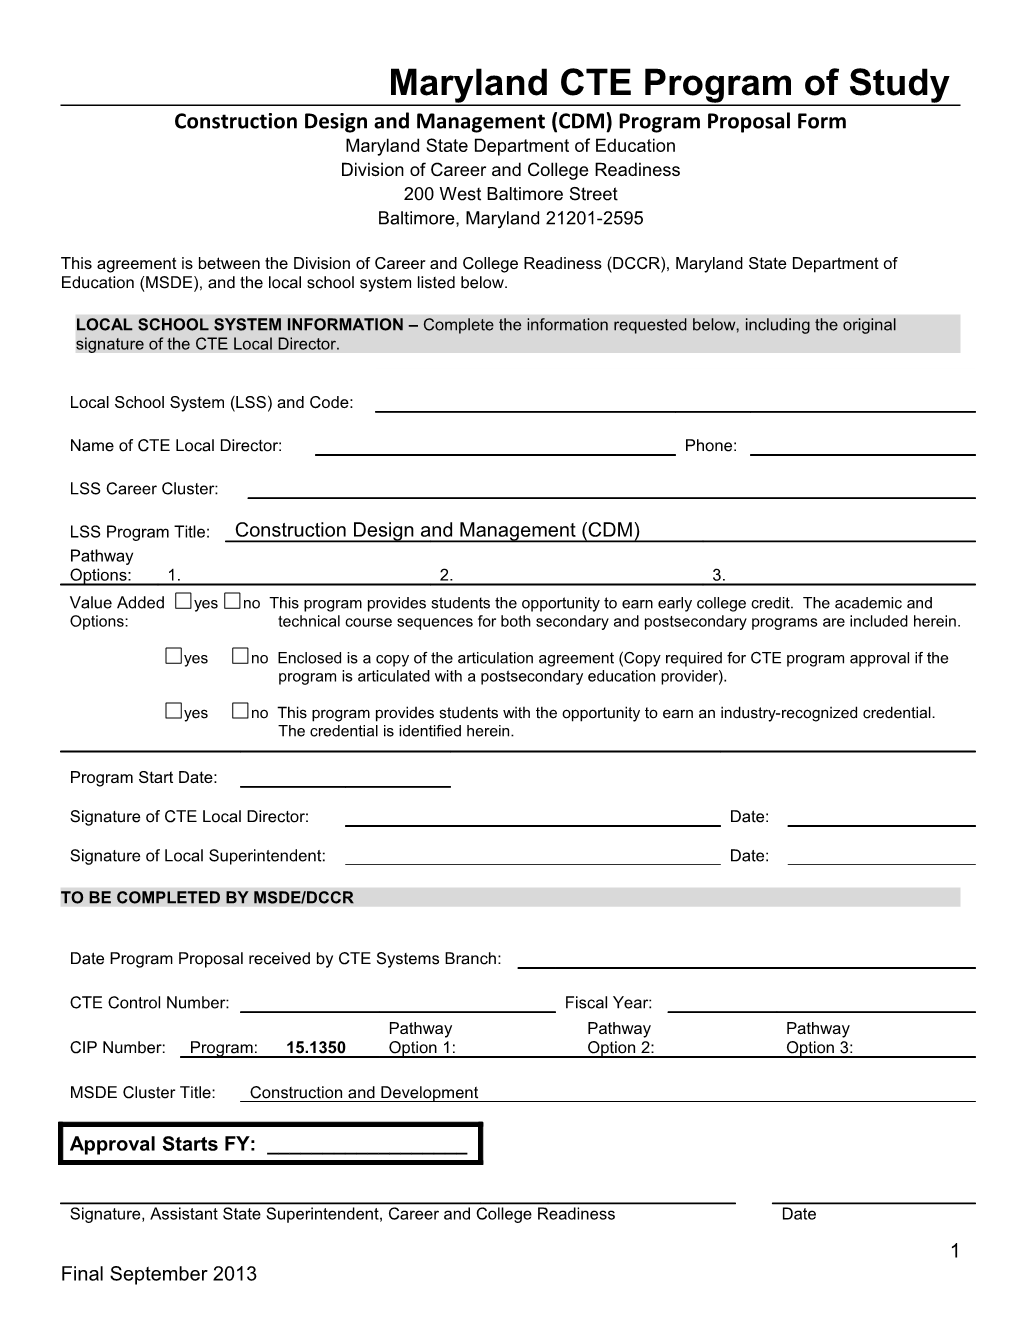 Construction Design and Management (CDM) Program Proposal Form